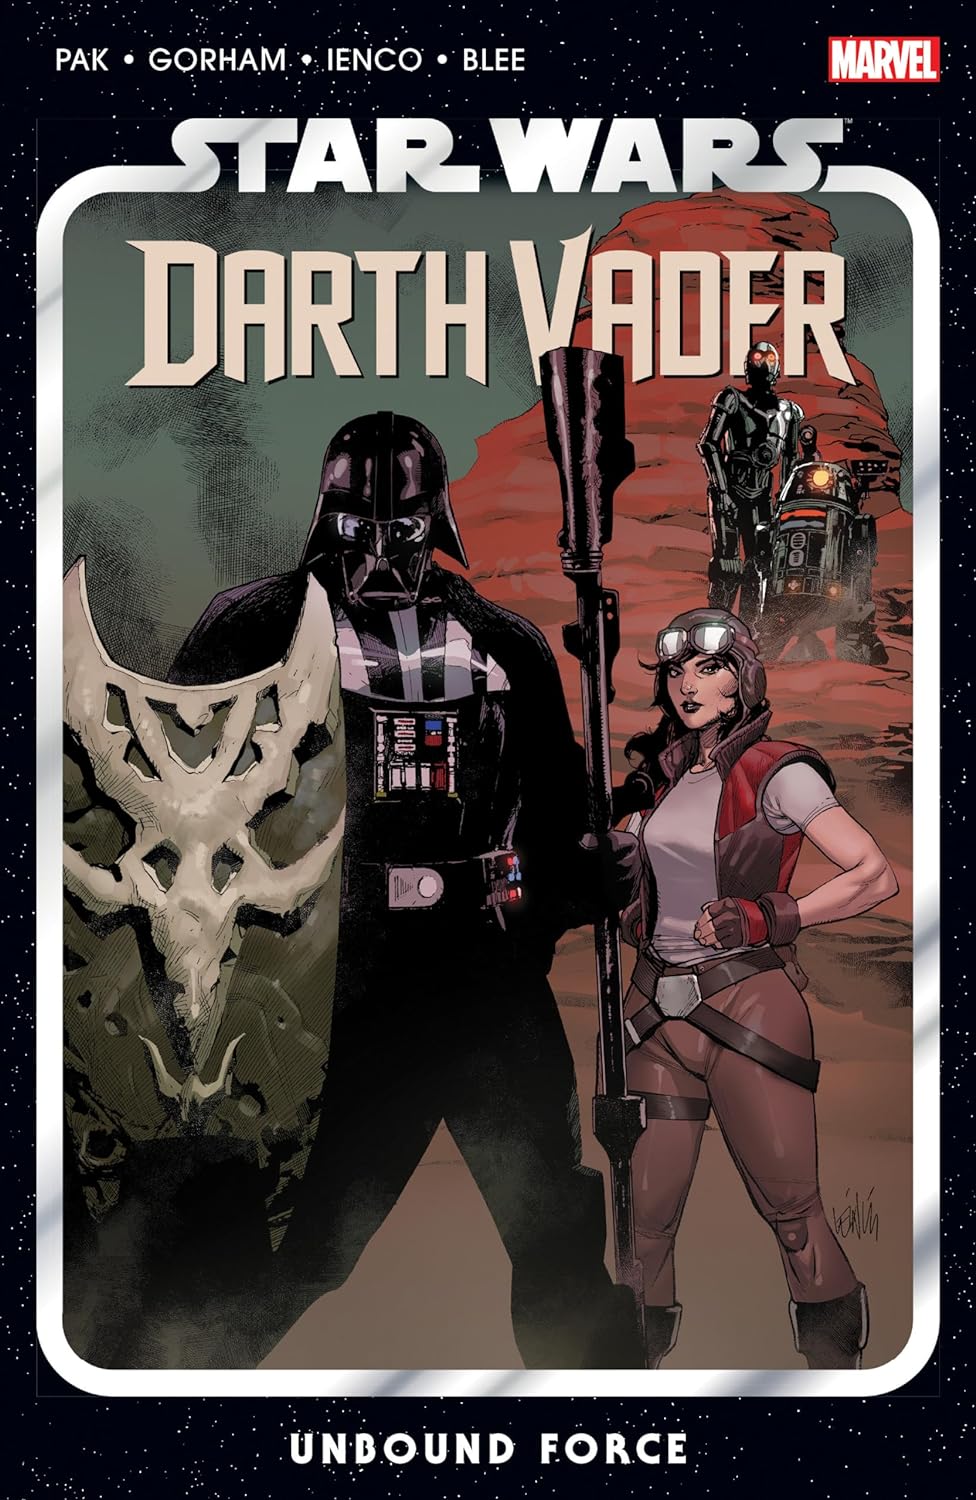 Star Wars: Darth Vader by Greg Pak Vol. 7